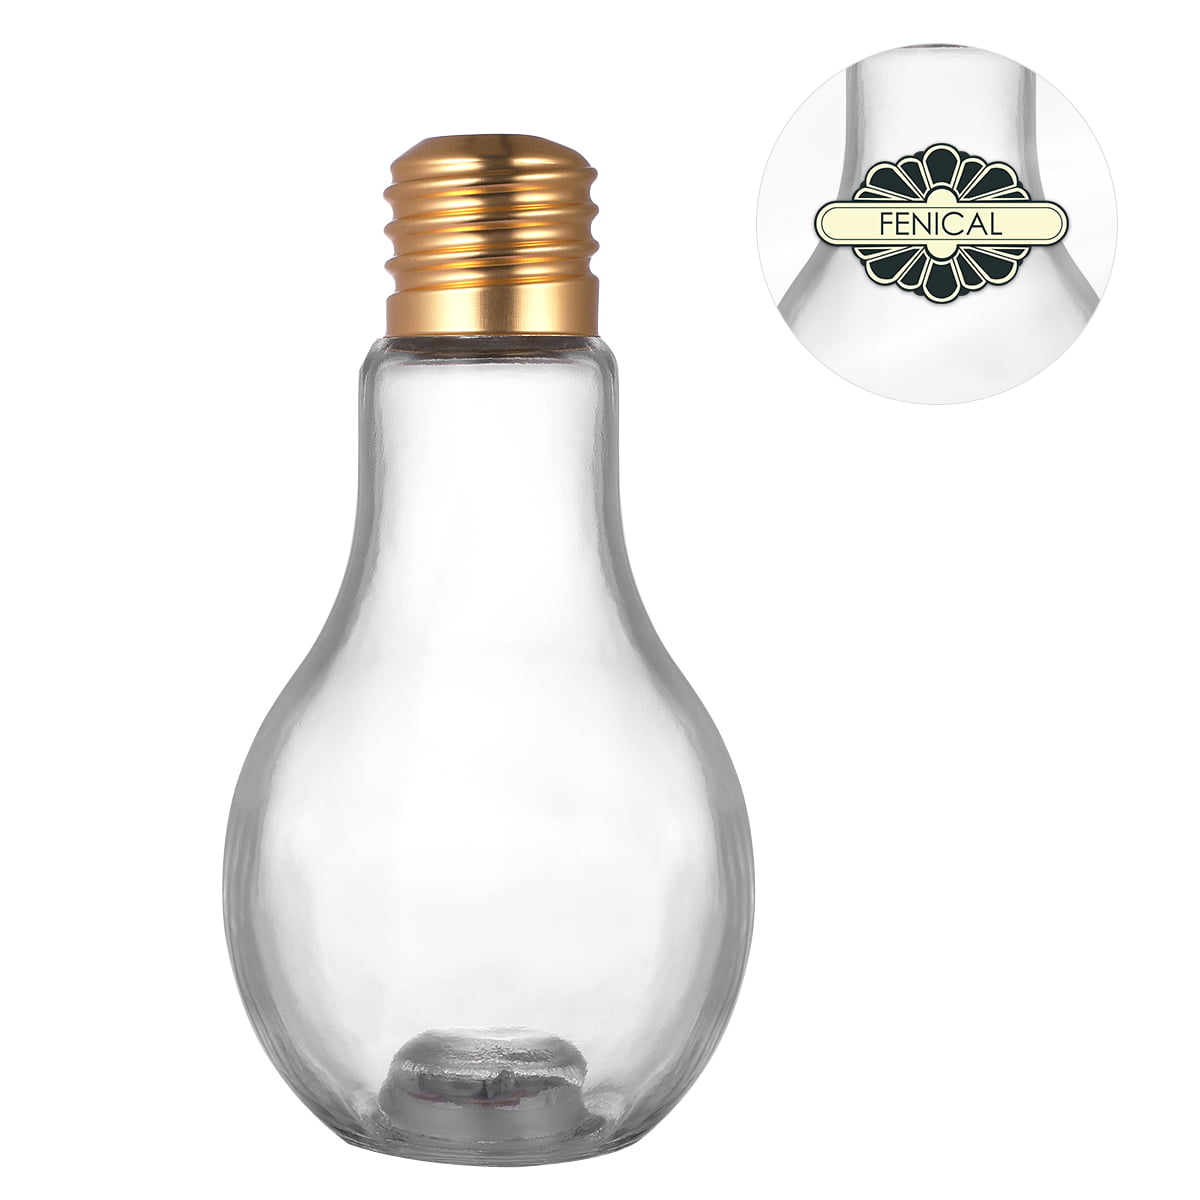 Fun Bubble Drinking Glass - Light Bulb from Apollo Box